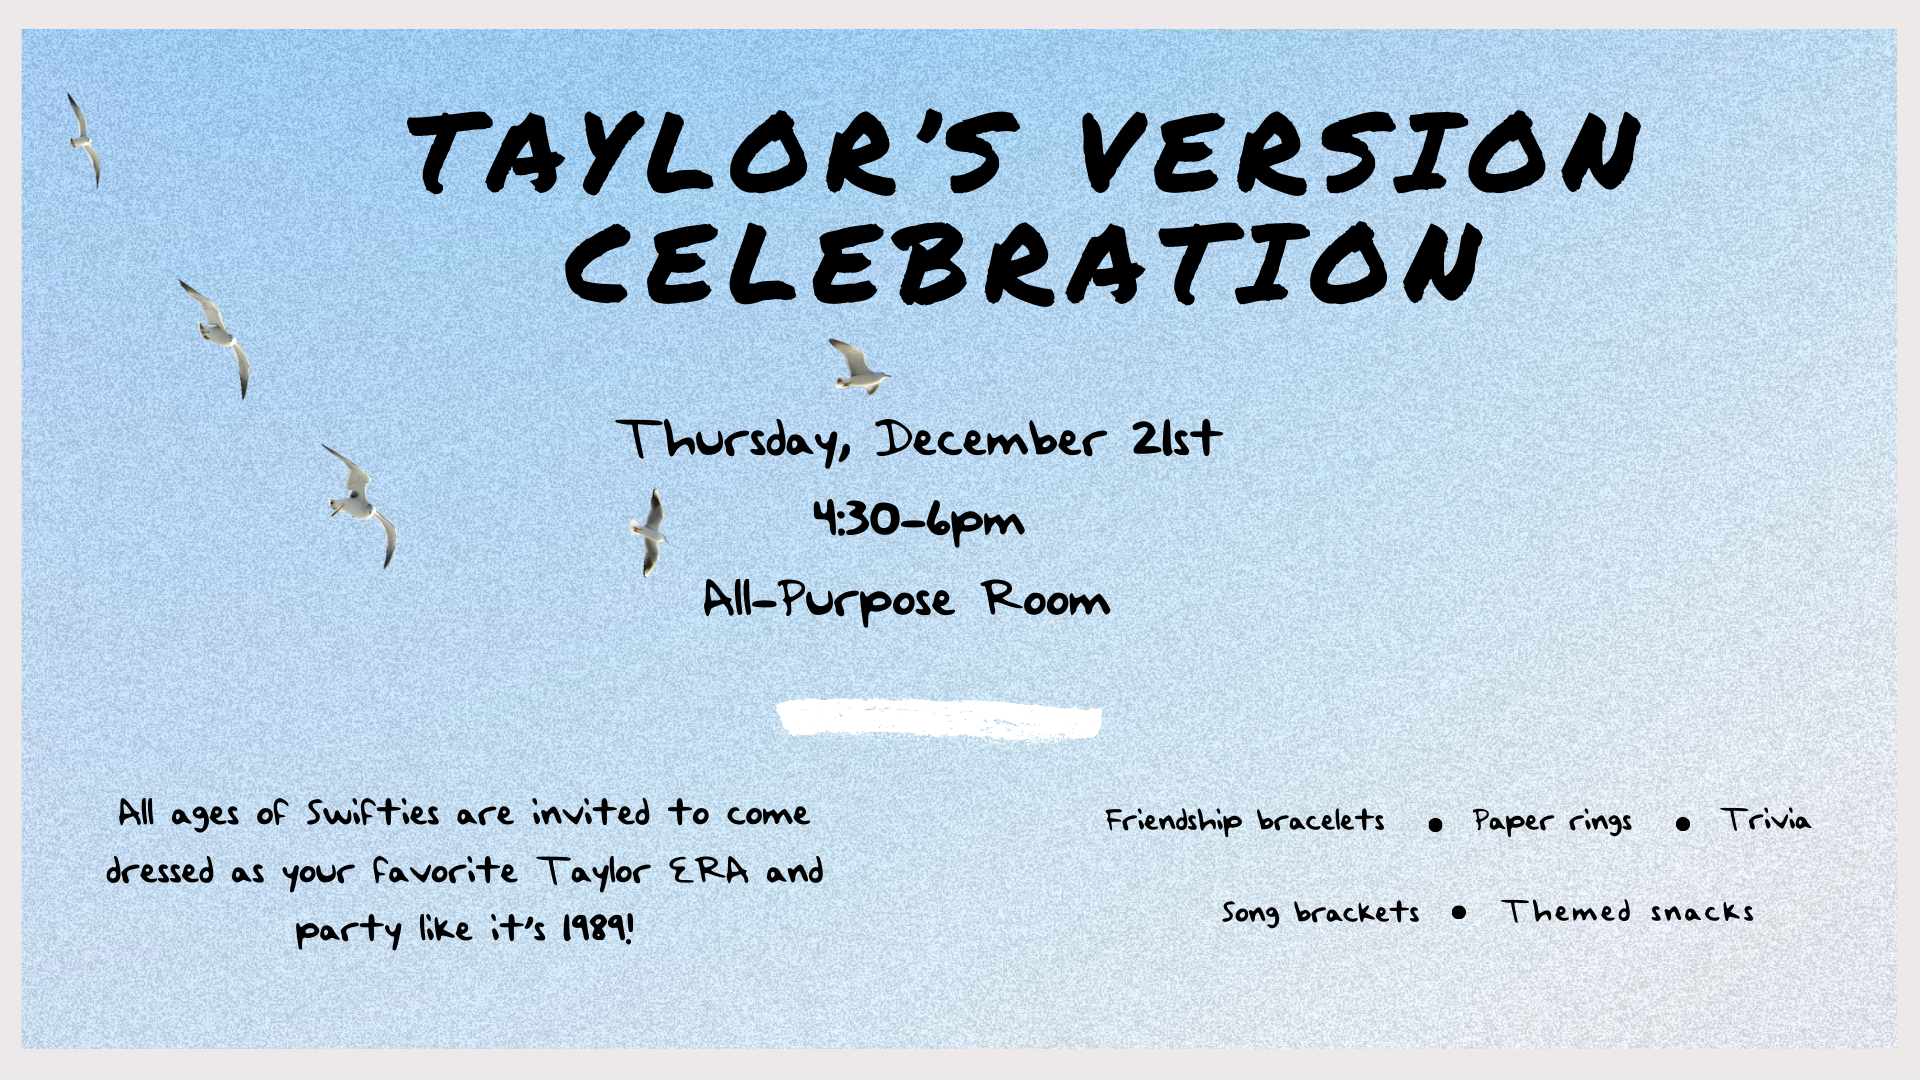 Taylor's Version Celebration, Thursday, December 21, 4:30-6pm, All Purpose Room 